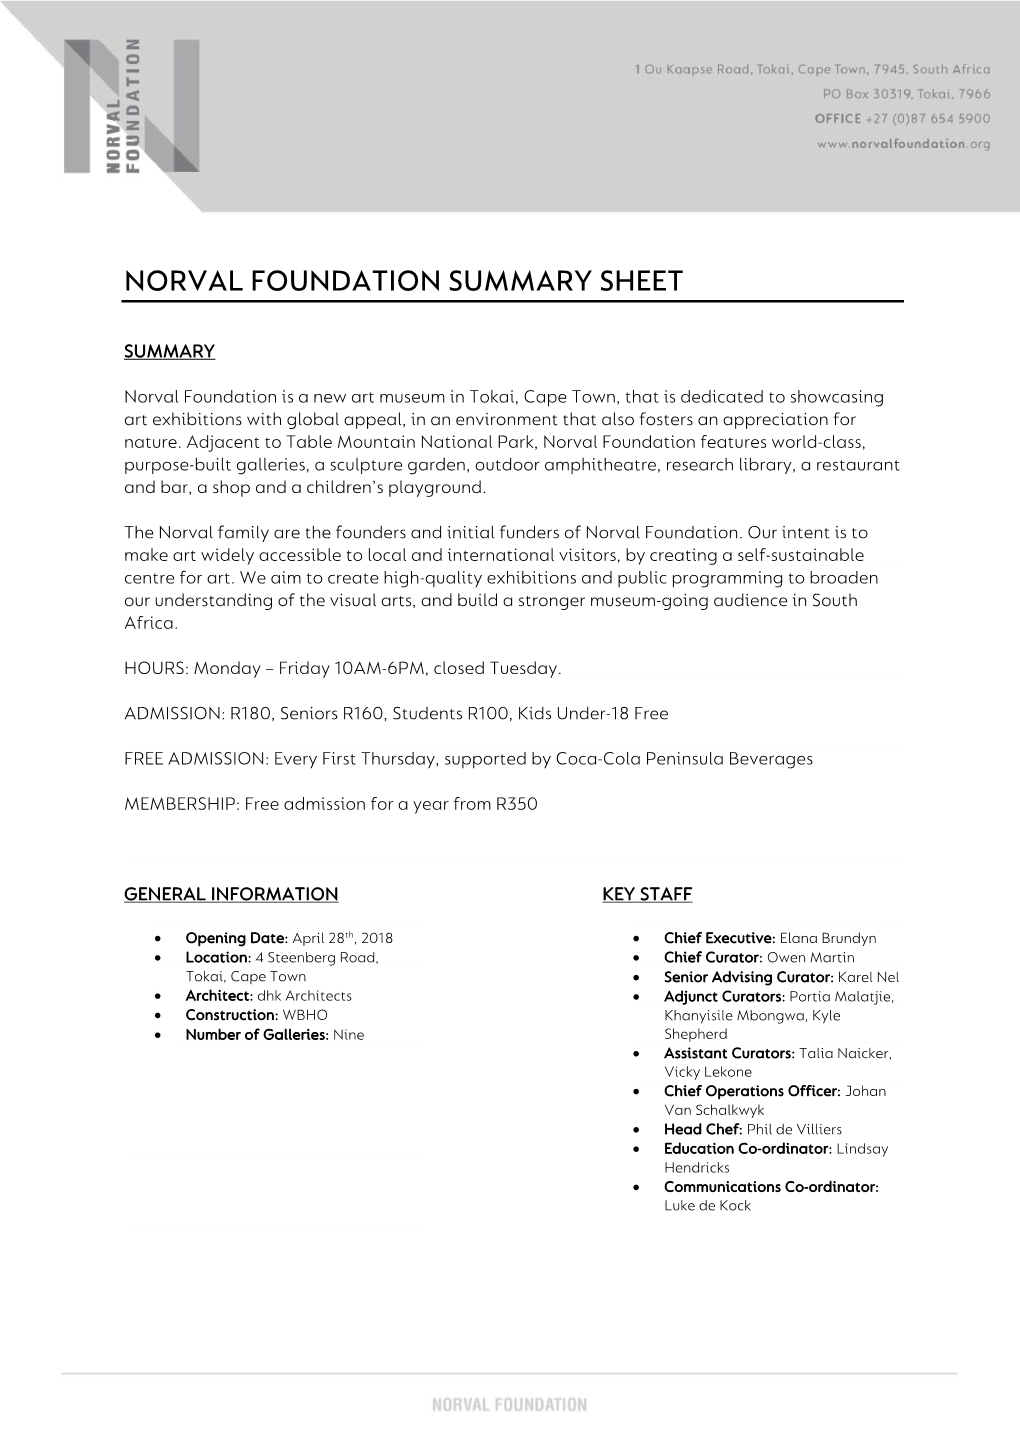 Norval Foundation Summary Sheet